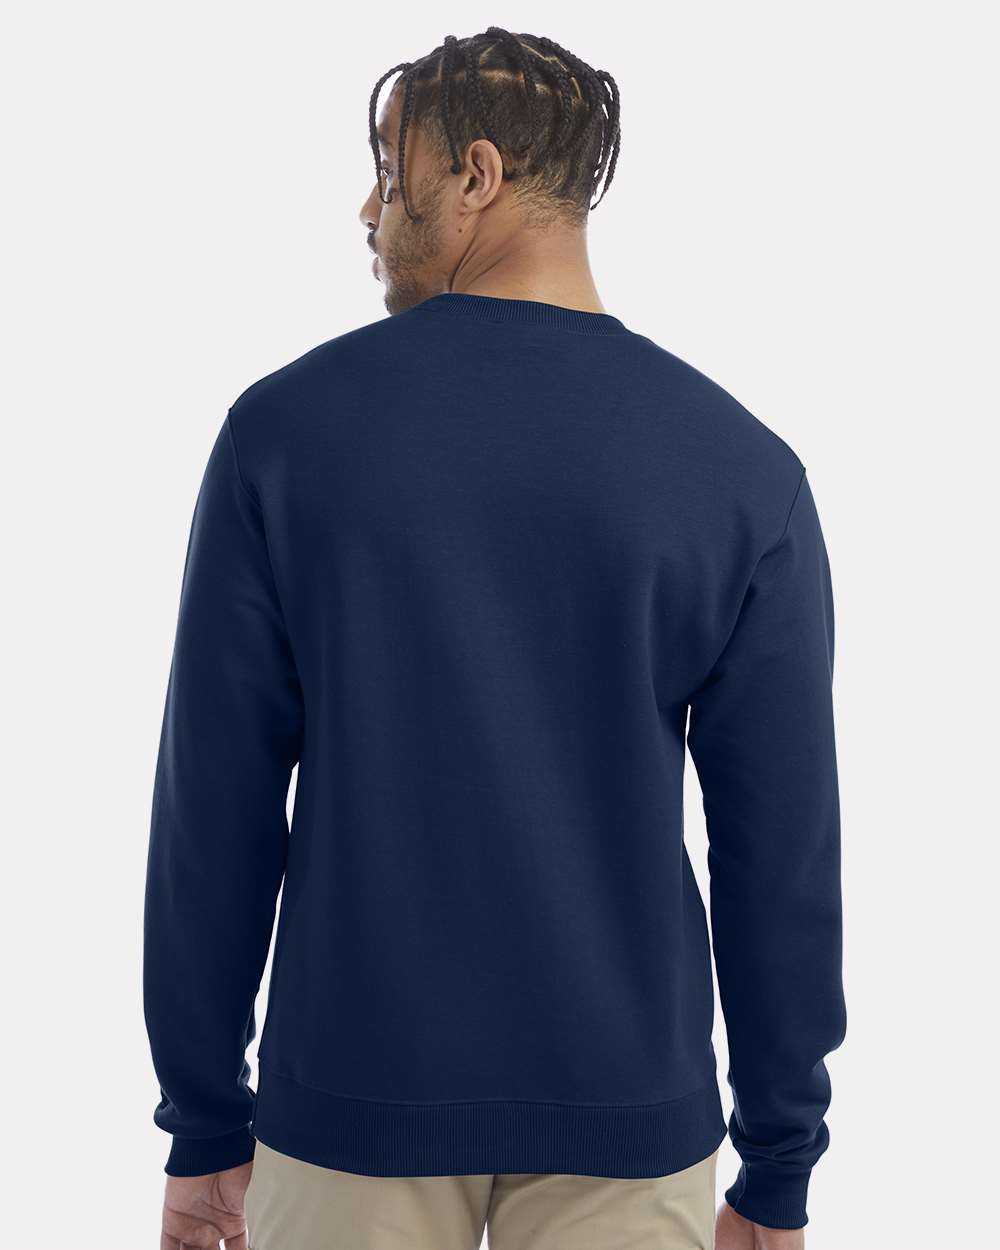 Champion S600 Powerblend Crewneck Sweatshirt - Late Night Blue